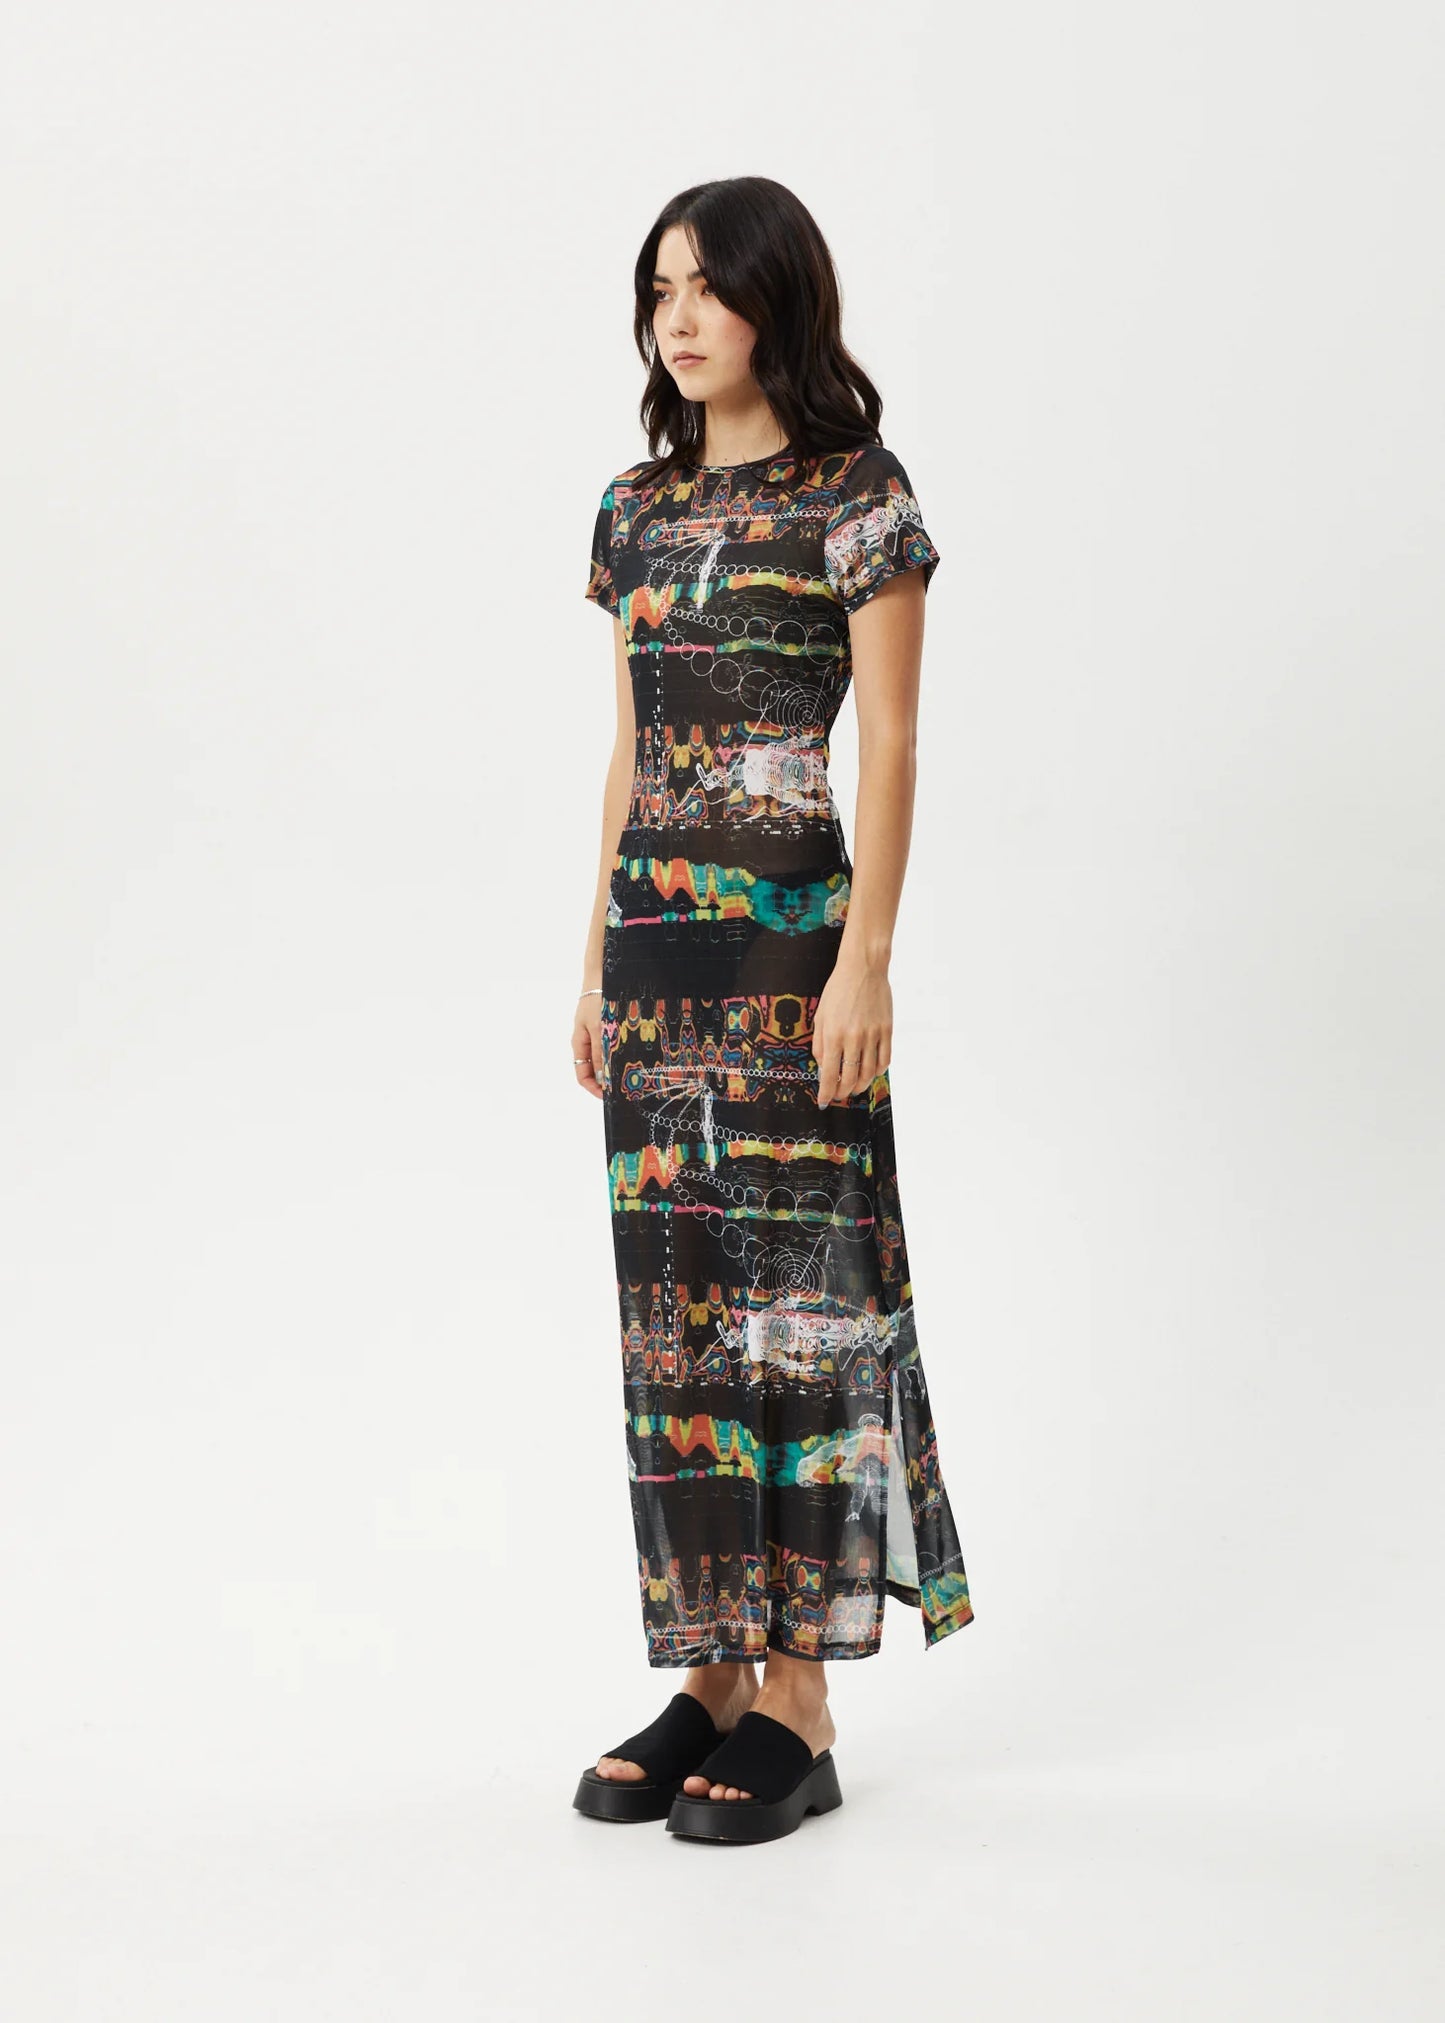 Dresses - AFENDS - Astral Recycled Sheer Dress - PLENTY